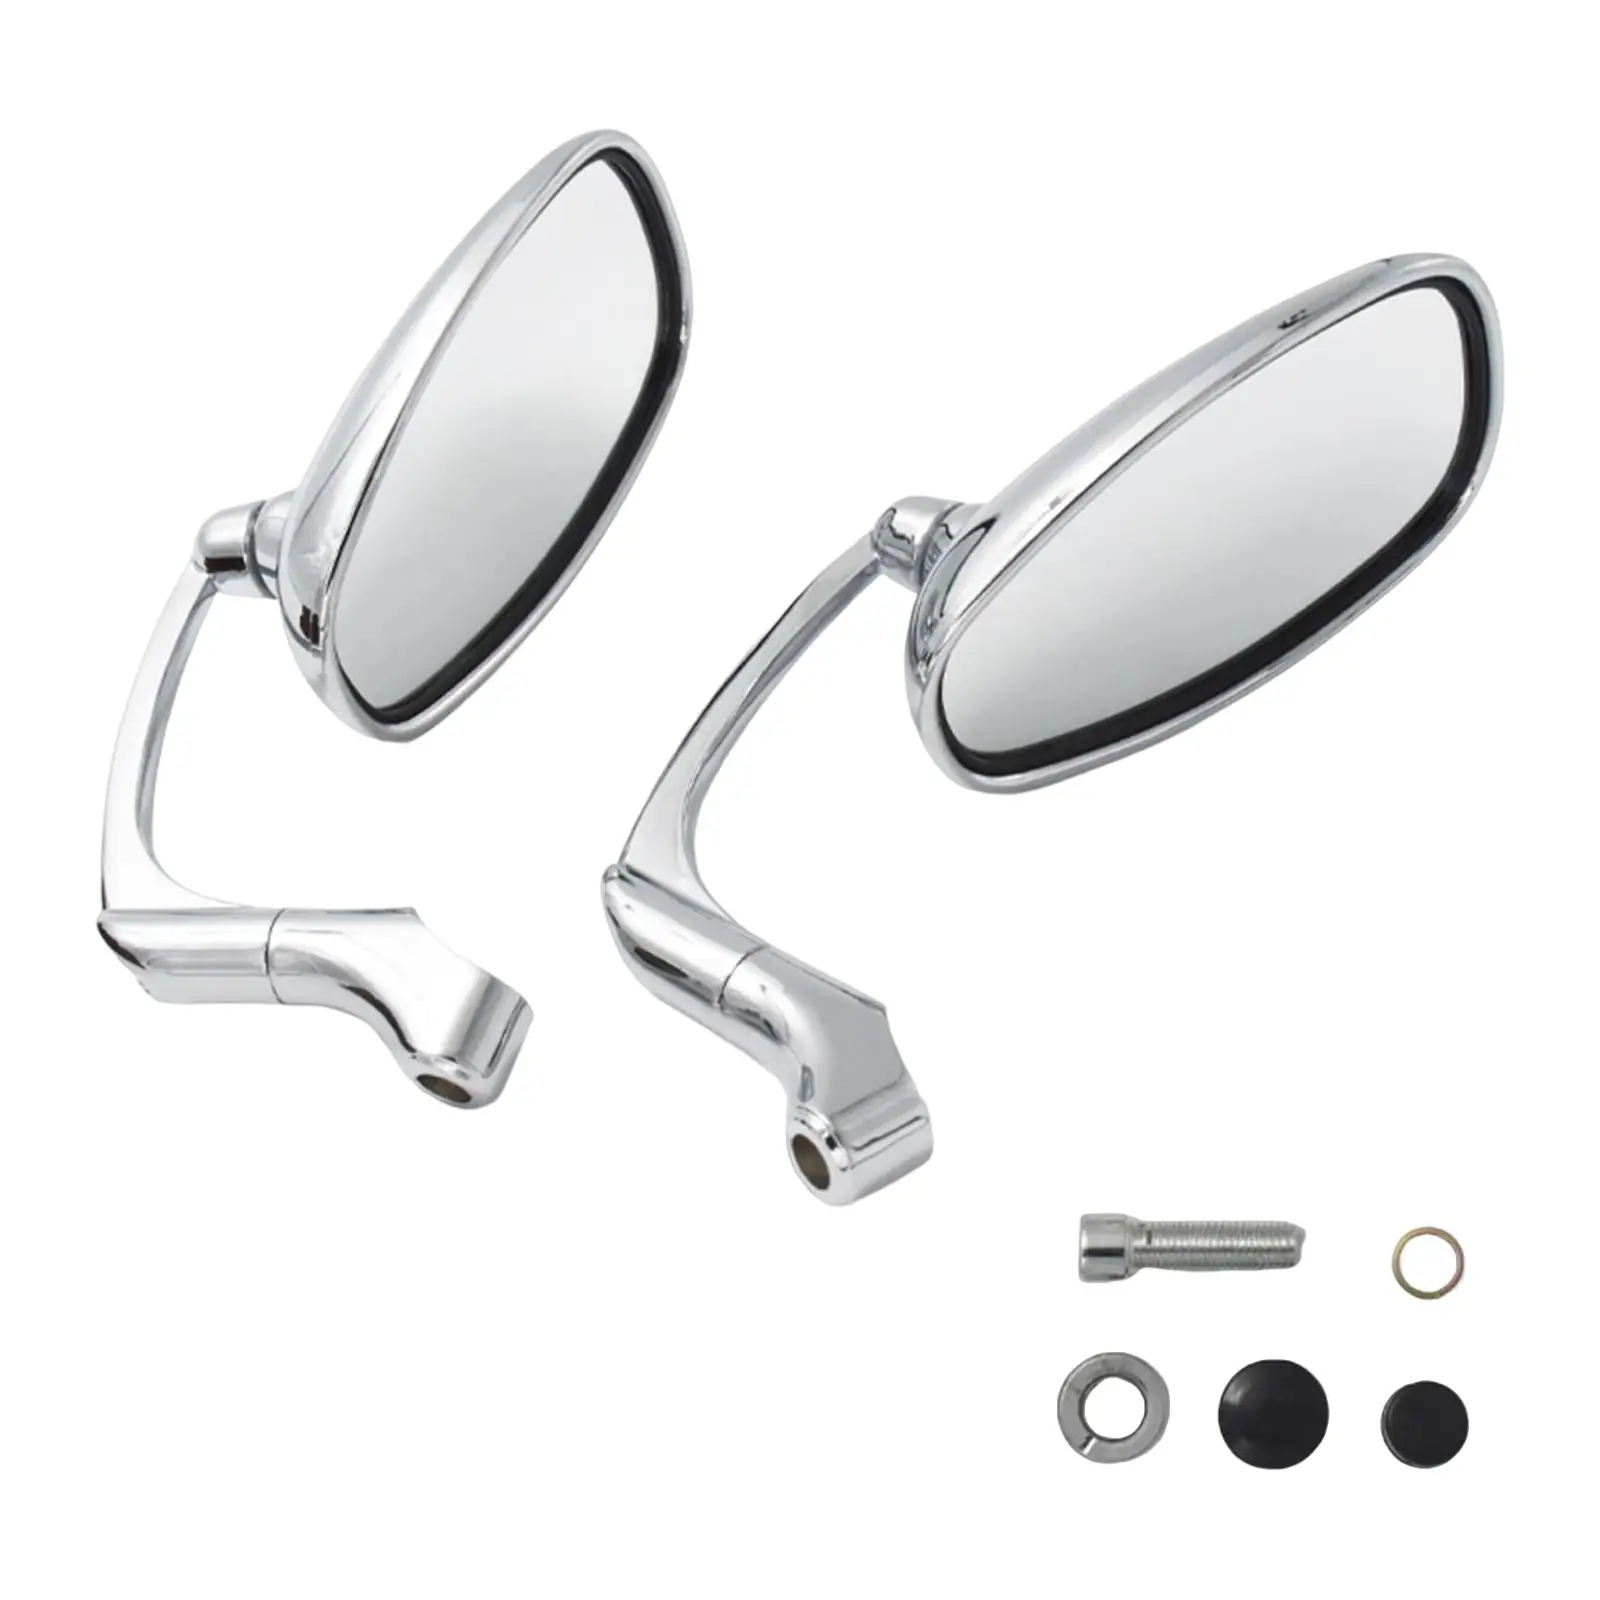 Motorcycle Rear Mirror Replacements Automotive Accessories Handle Bar Mirror